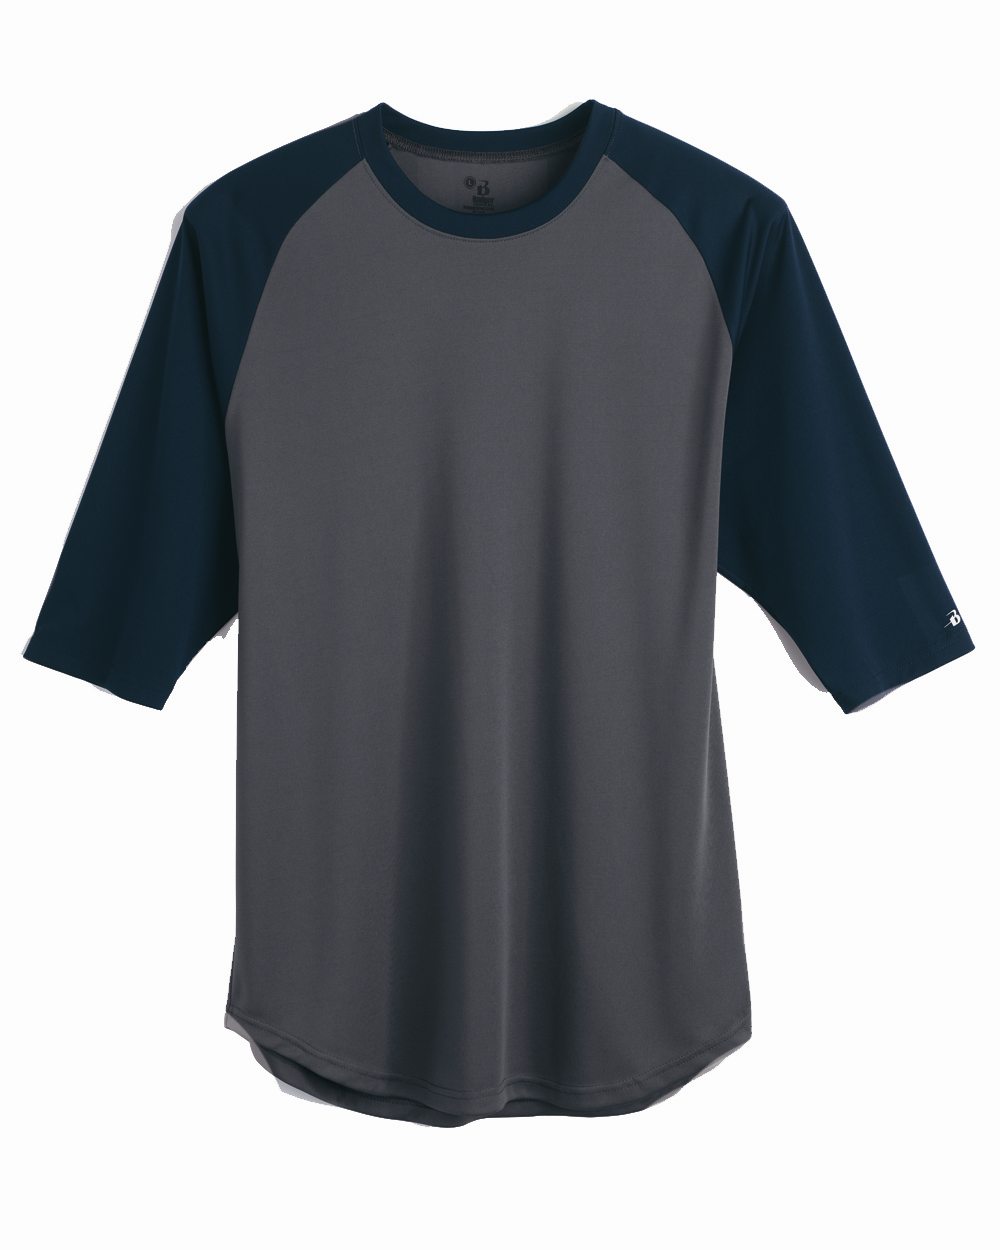 Badger 4133 - B-Core 3/4 Sleeve Baseball Undershirt